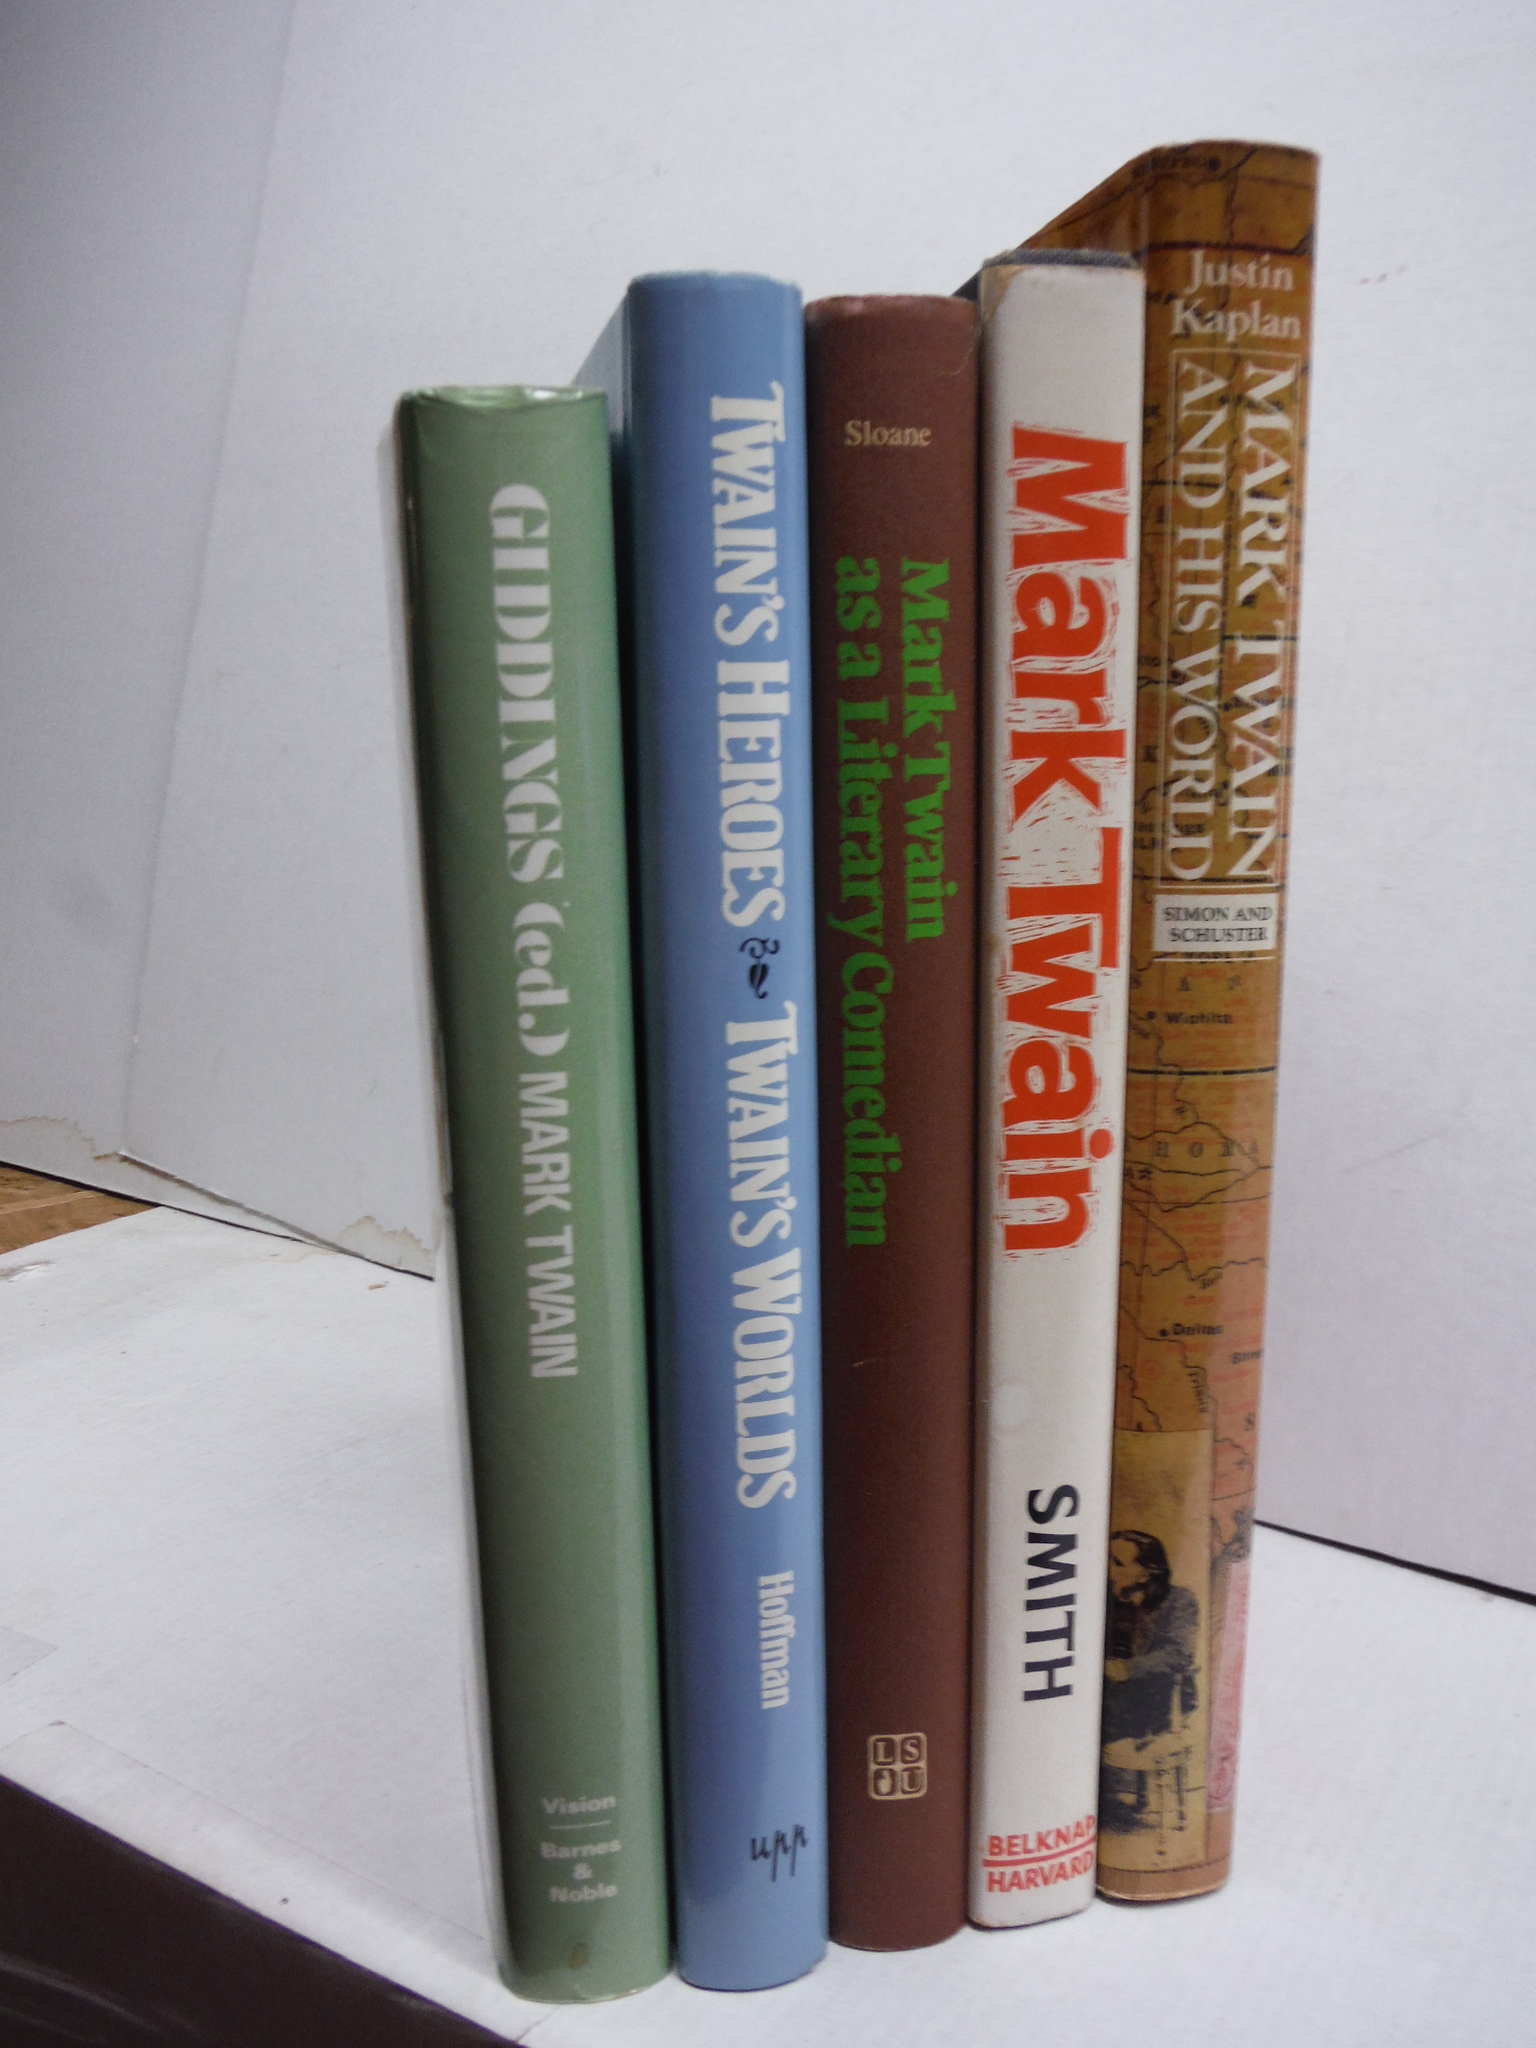 Lot of 5 HC books on Mark Twain